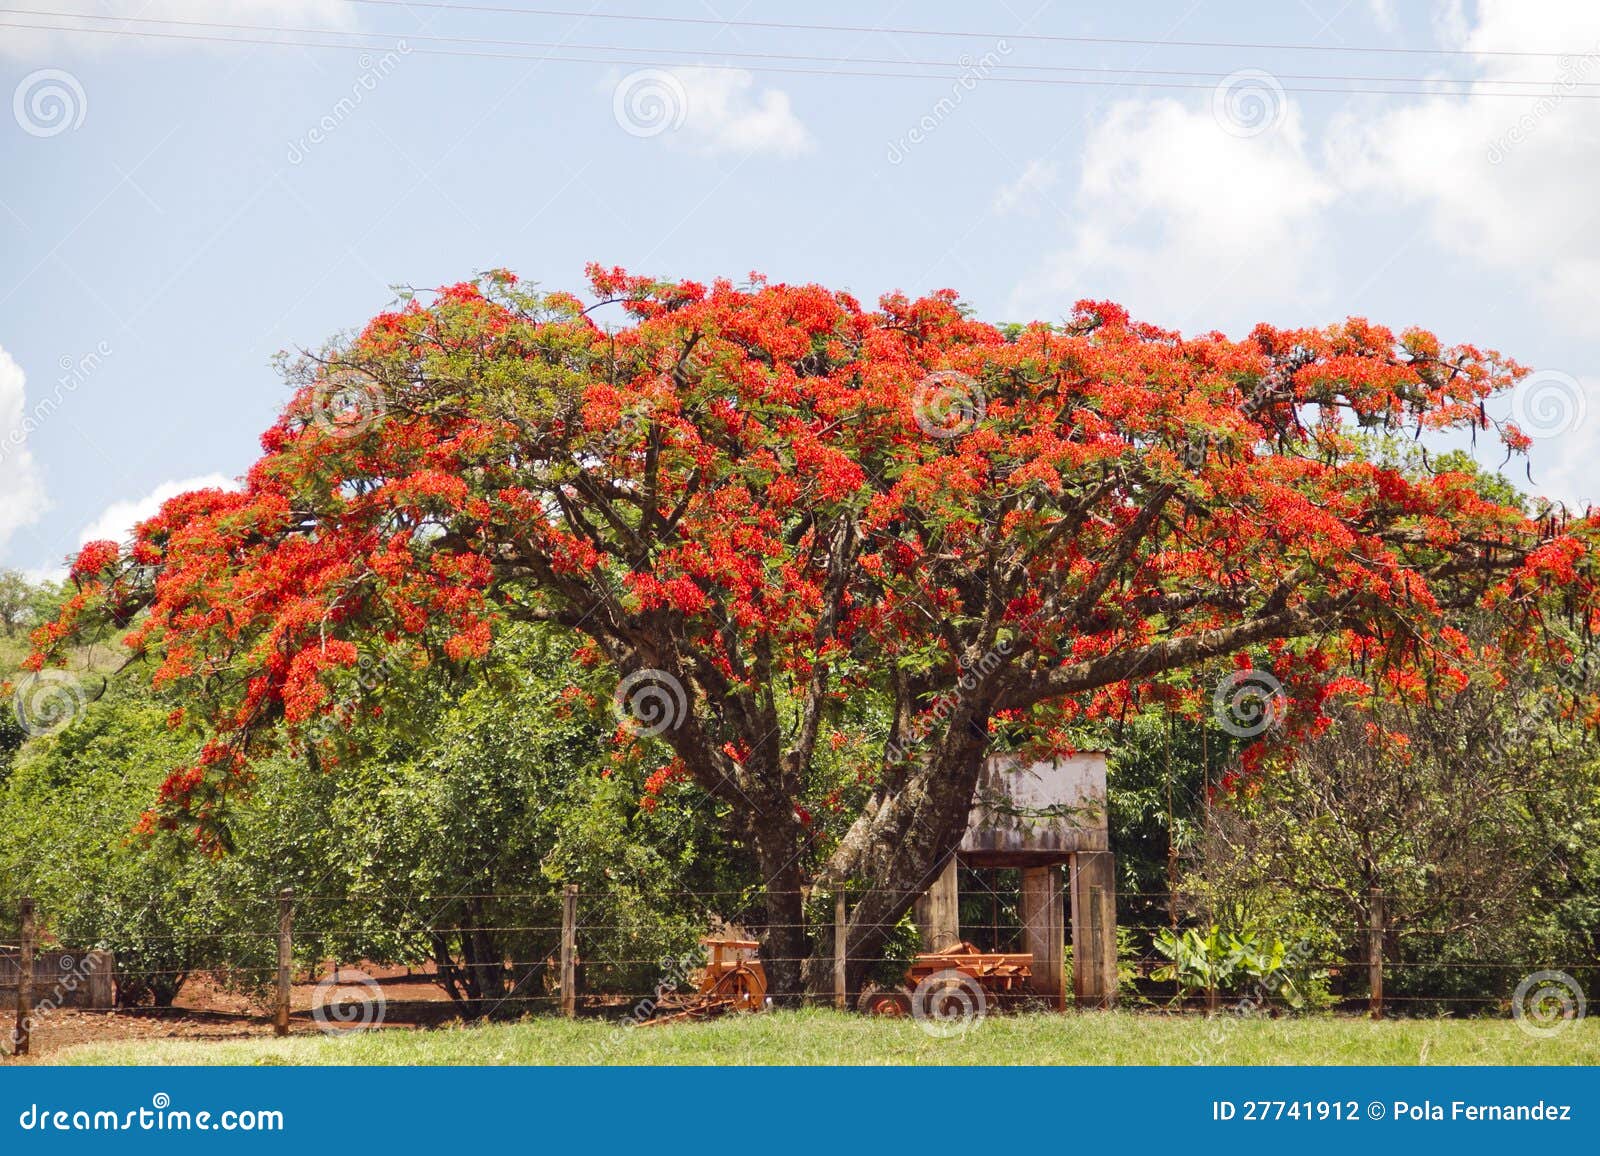 flamboyant tree